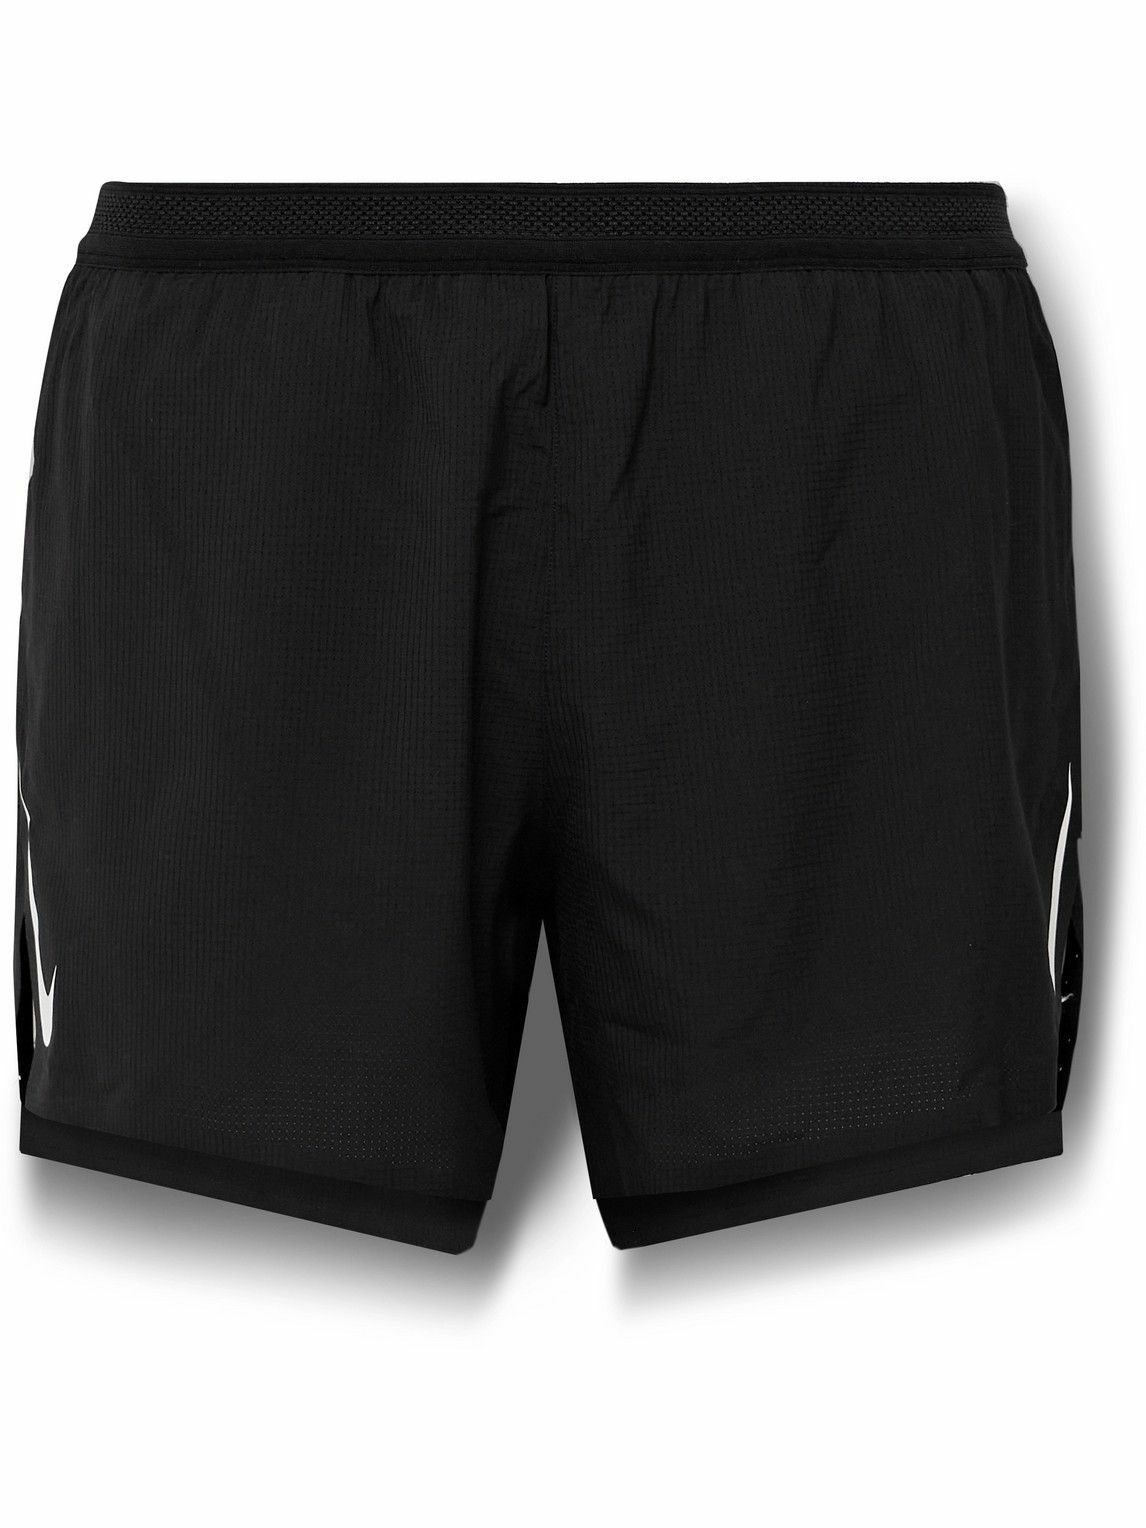 Photo: Nike Running - AeroSwift Ripstop Running Shorts - Black